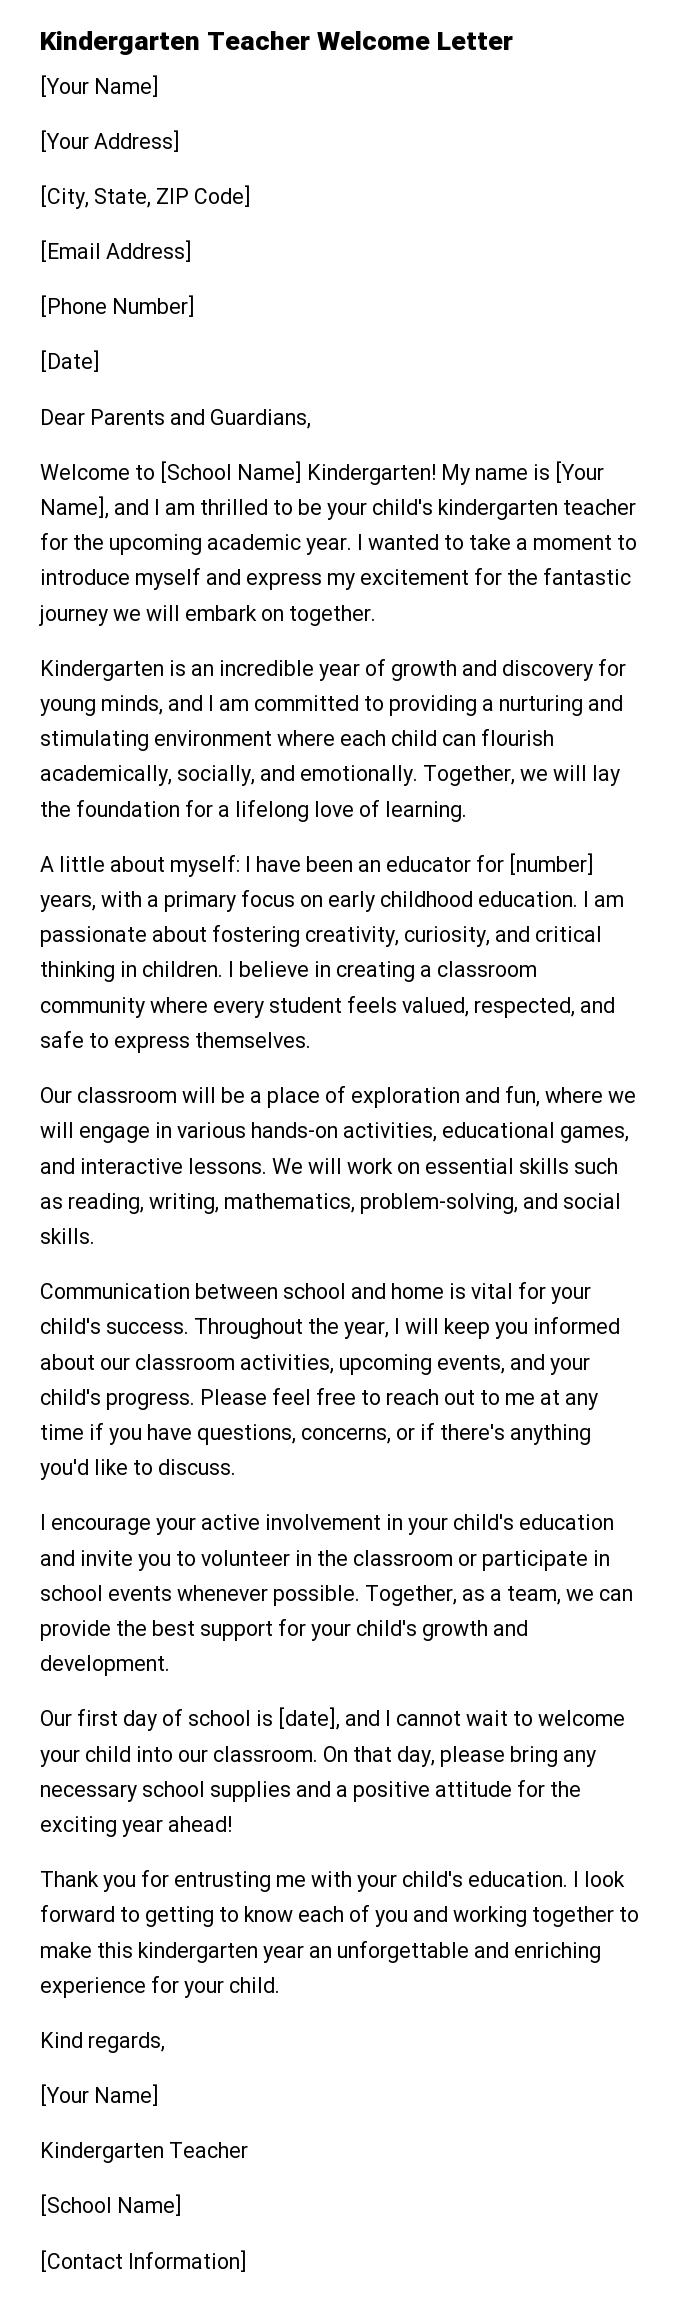 Kindergarten Teacher Welcome Letter